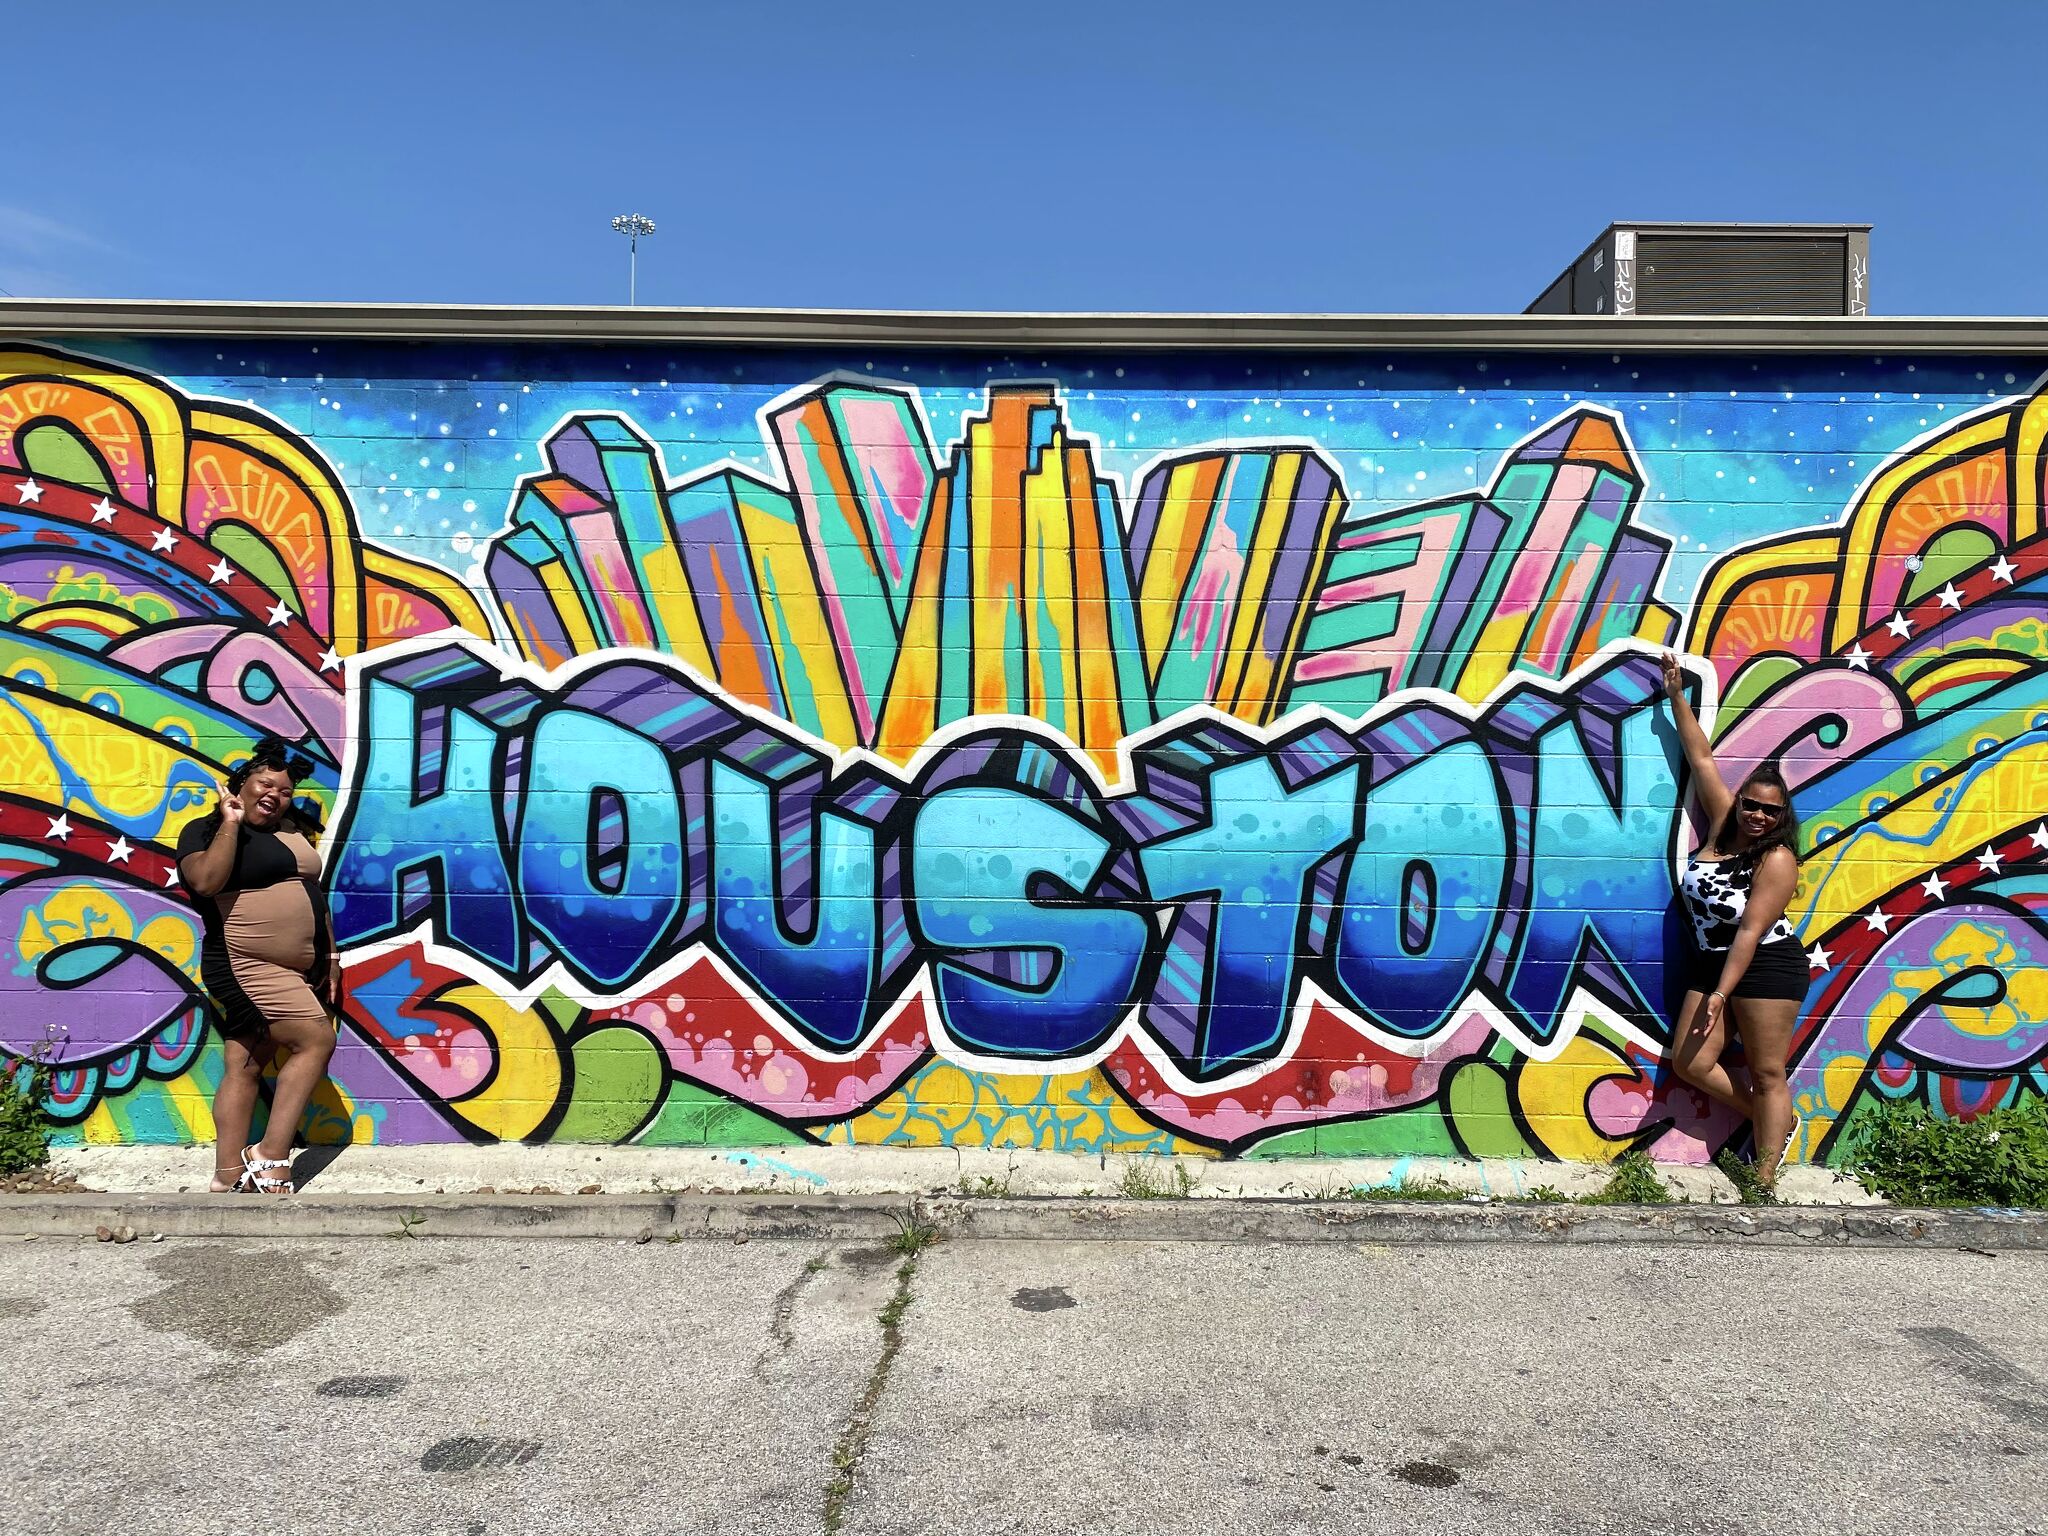 Discover Graffiti Park, Houston's vibrant outdoor gallery